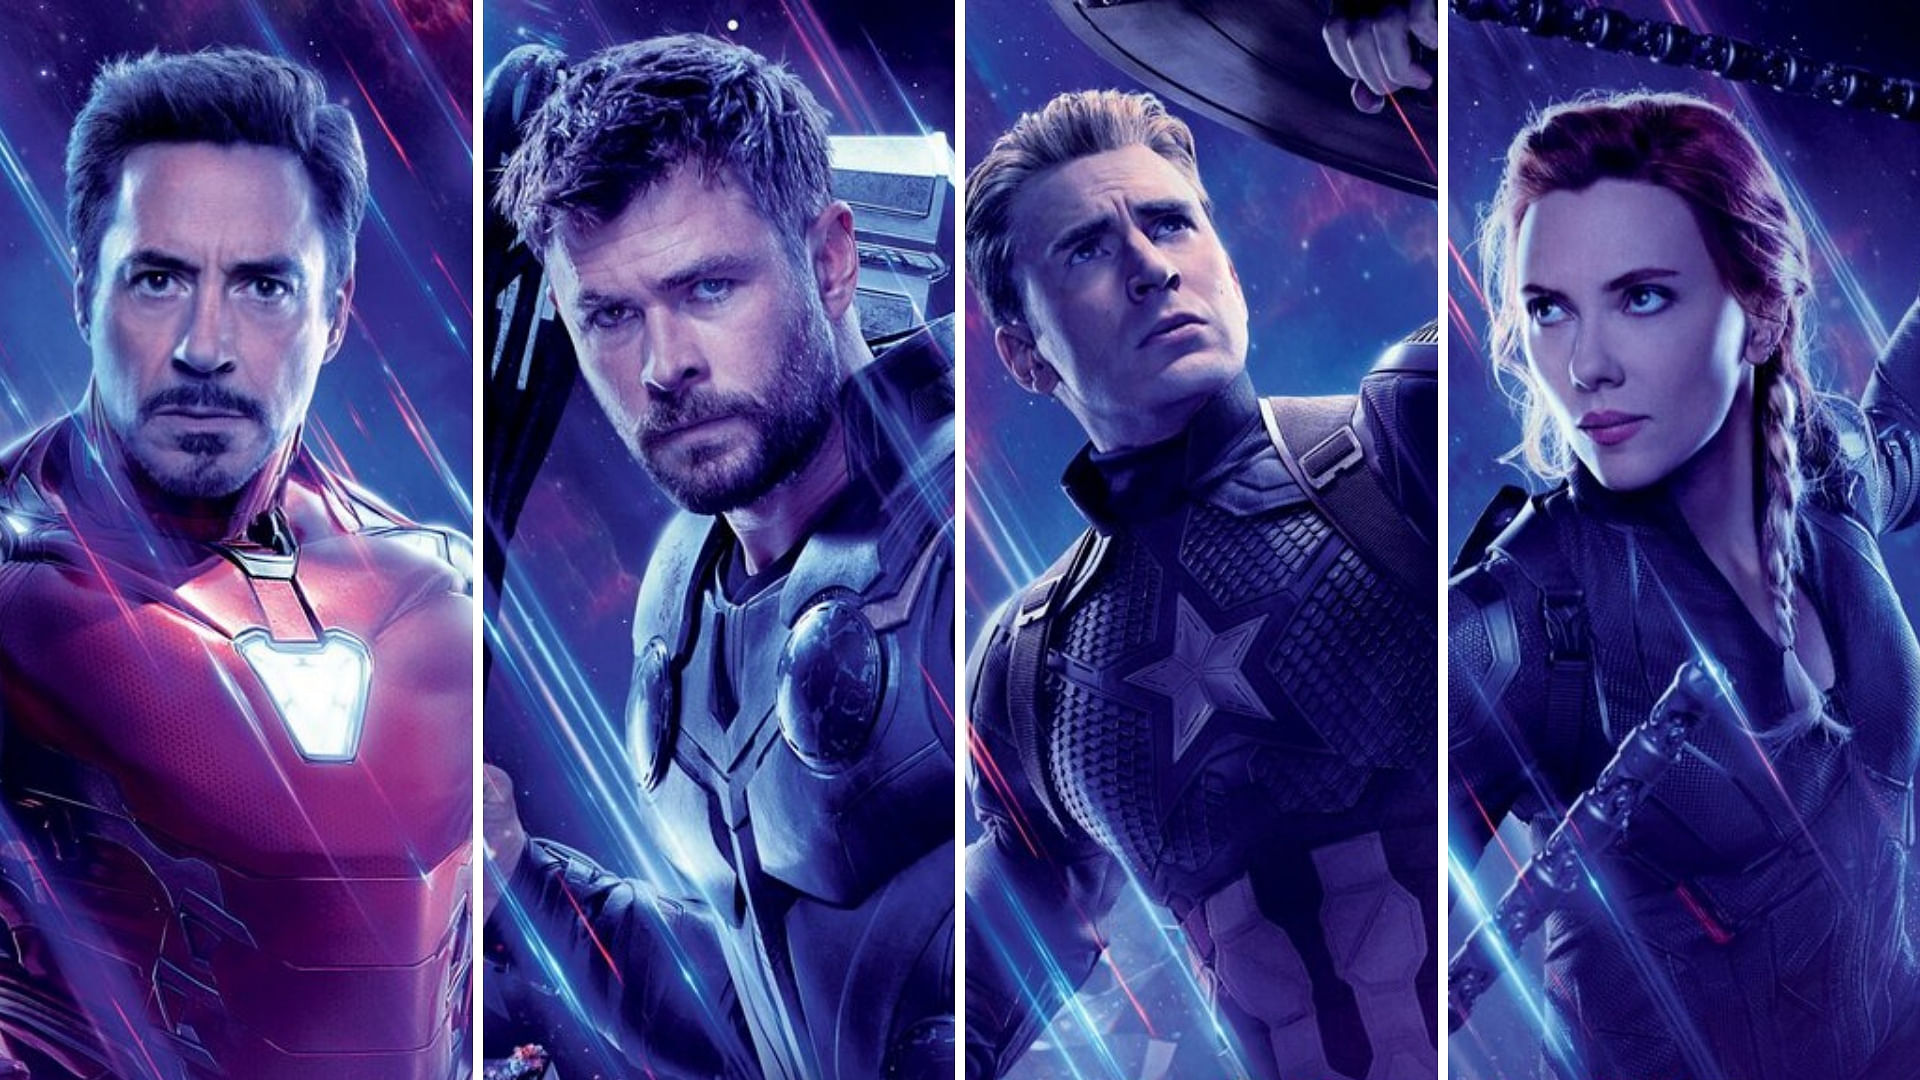 Iron Man, Thor, Captain America and Black Widow will reunite in <i>Avengers: Endgame</i>.